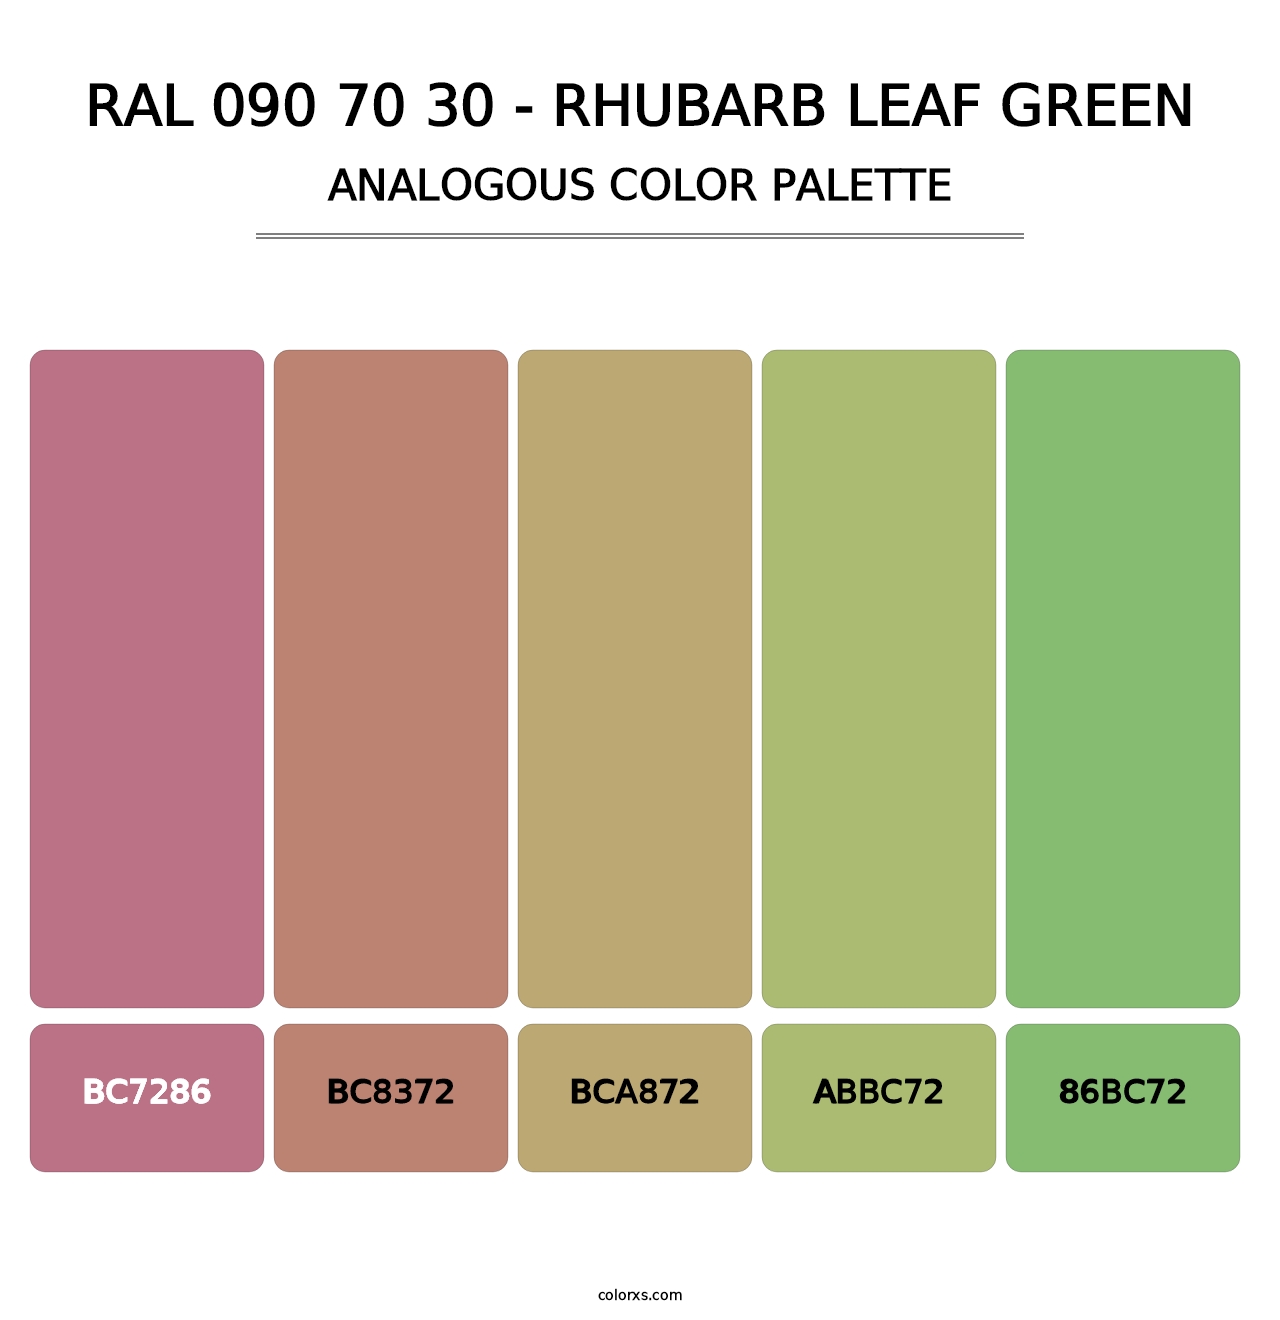 RAL 090 70 30 - Rhubarb Leaf Green - Analogous Color Palette